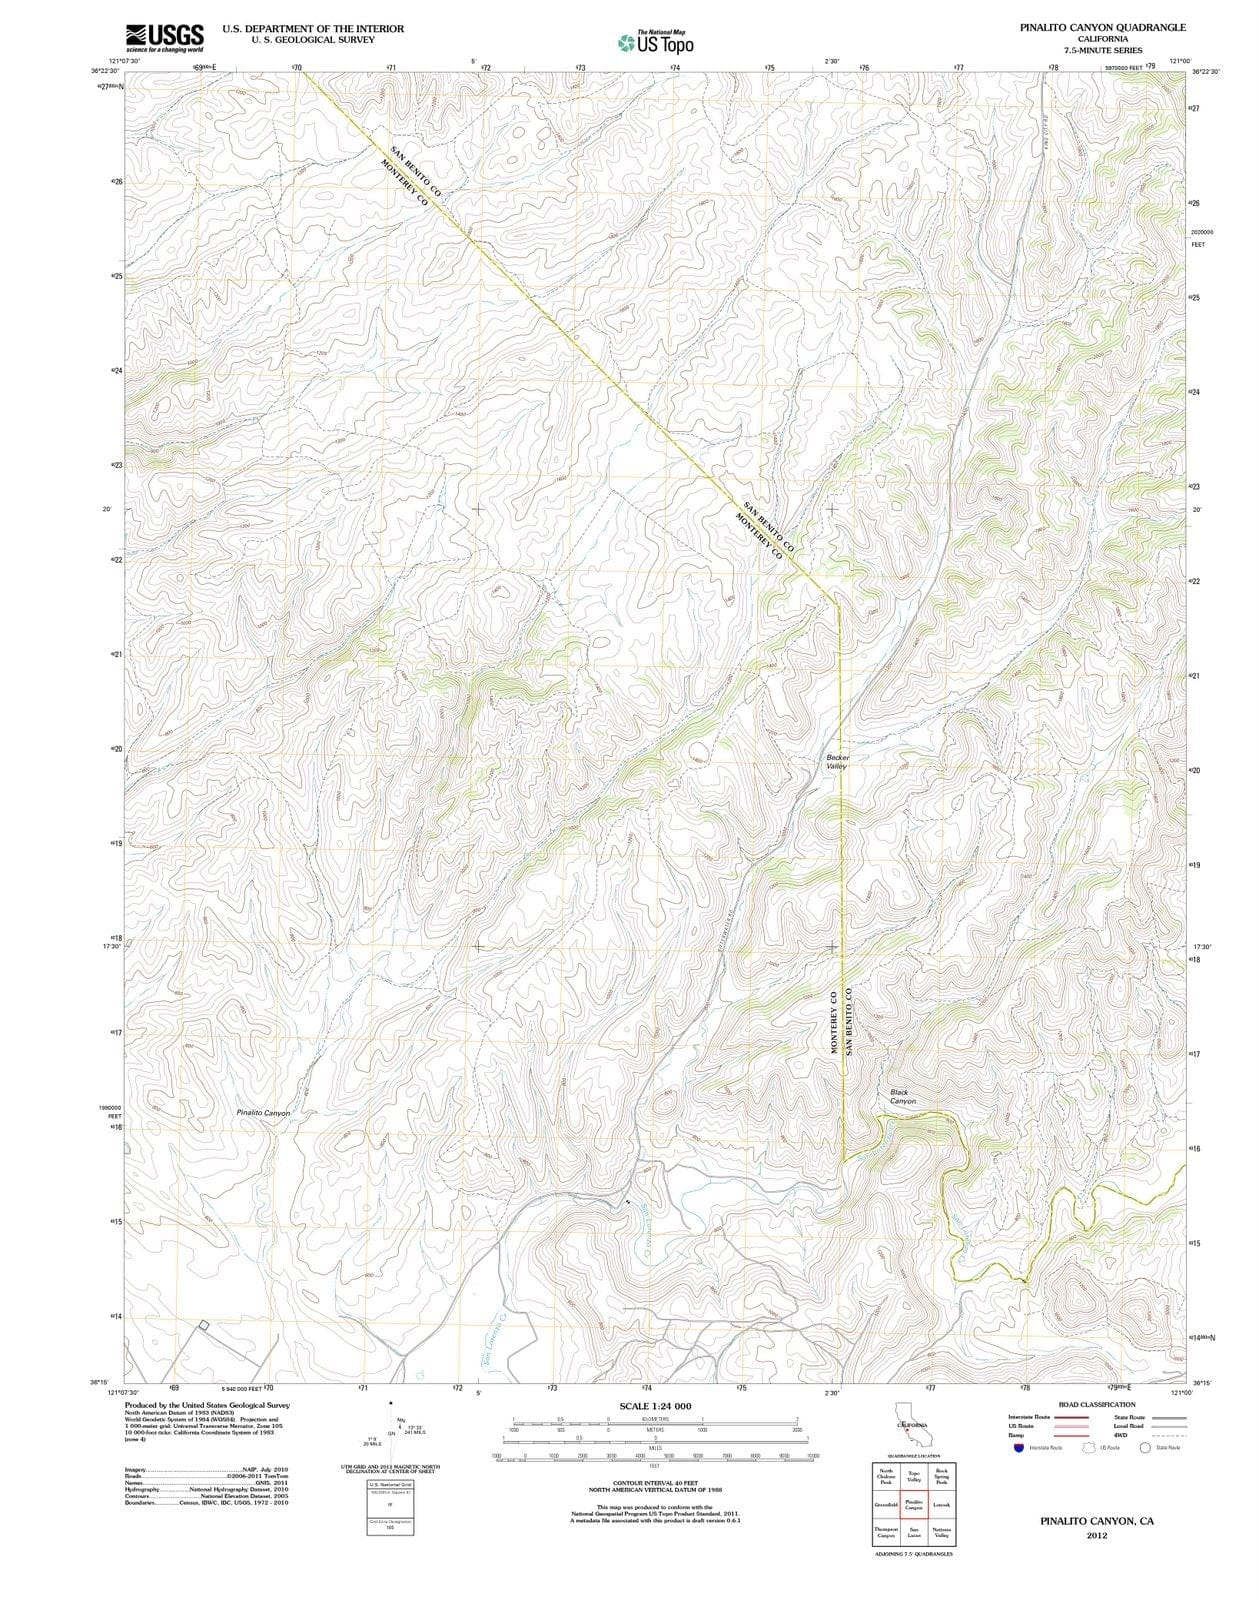 2012 Pinalito Canyon, CA - California - USGS Topographic Map